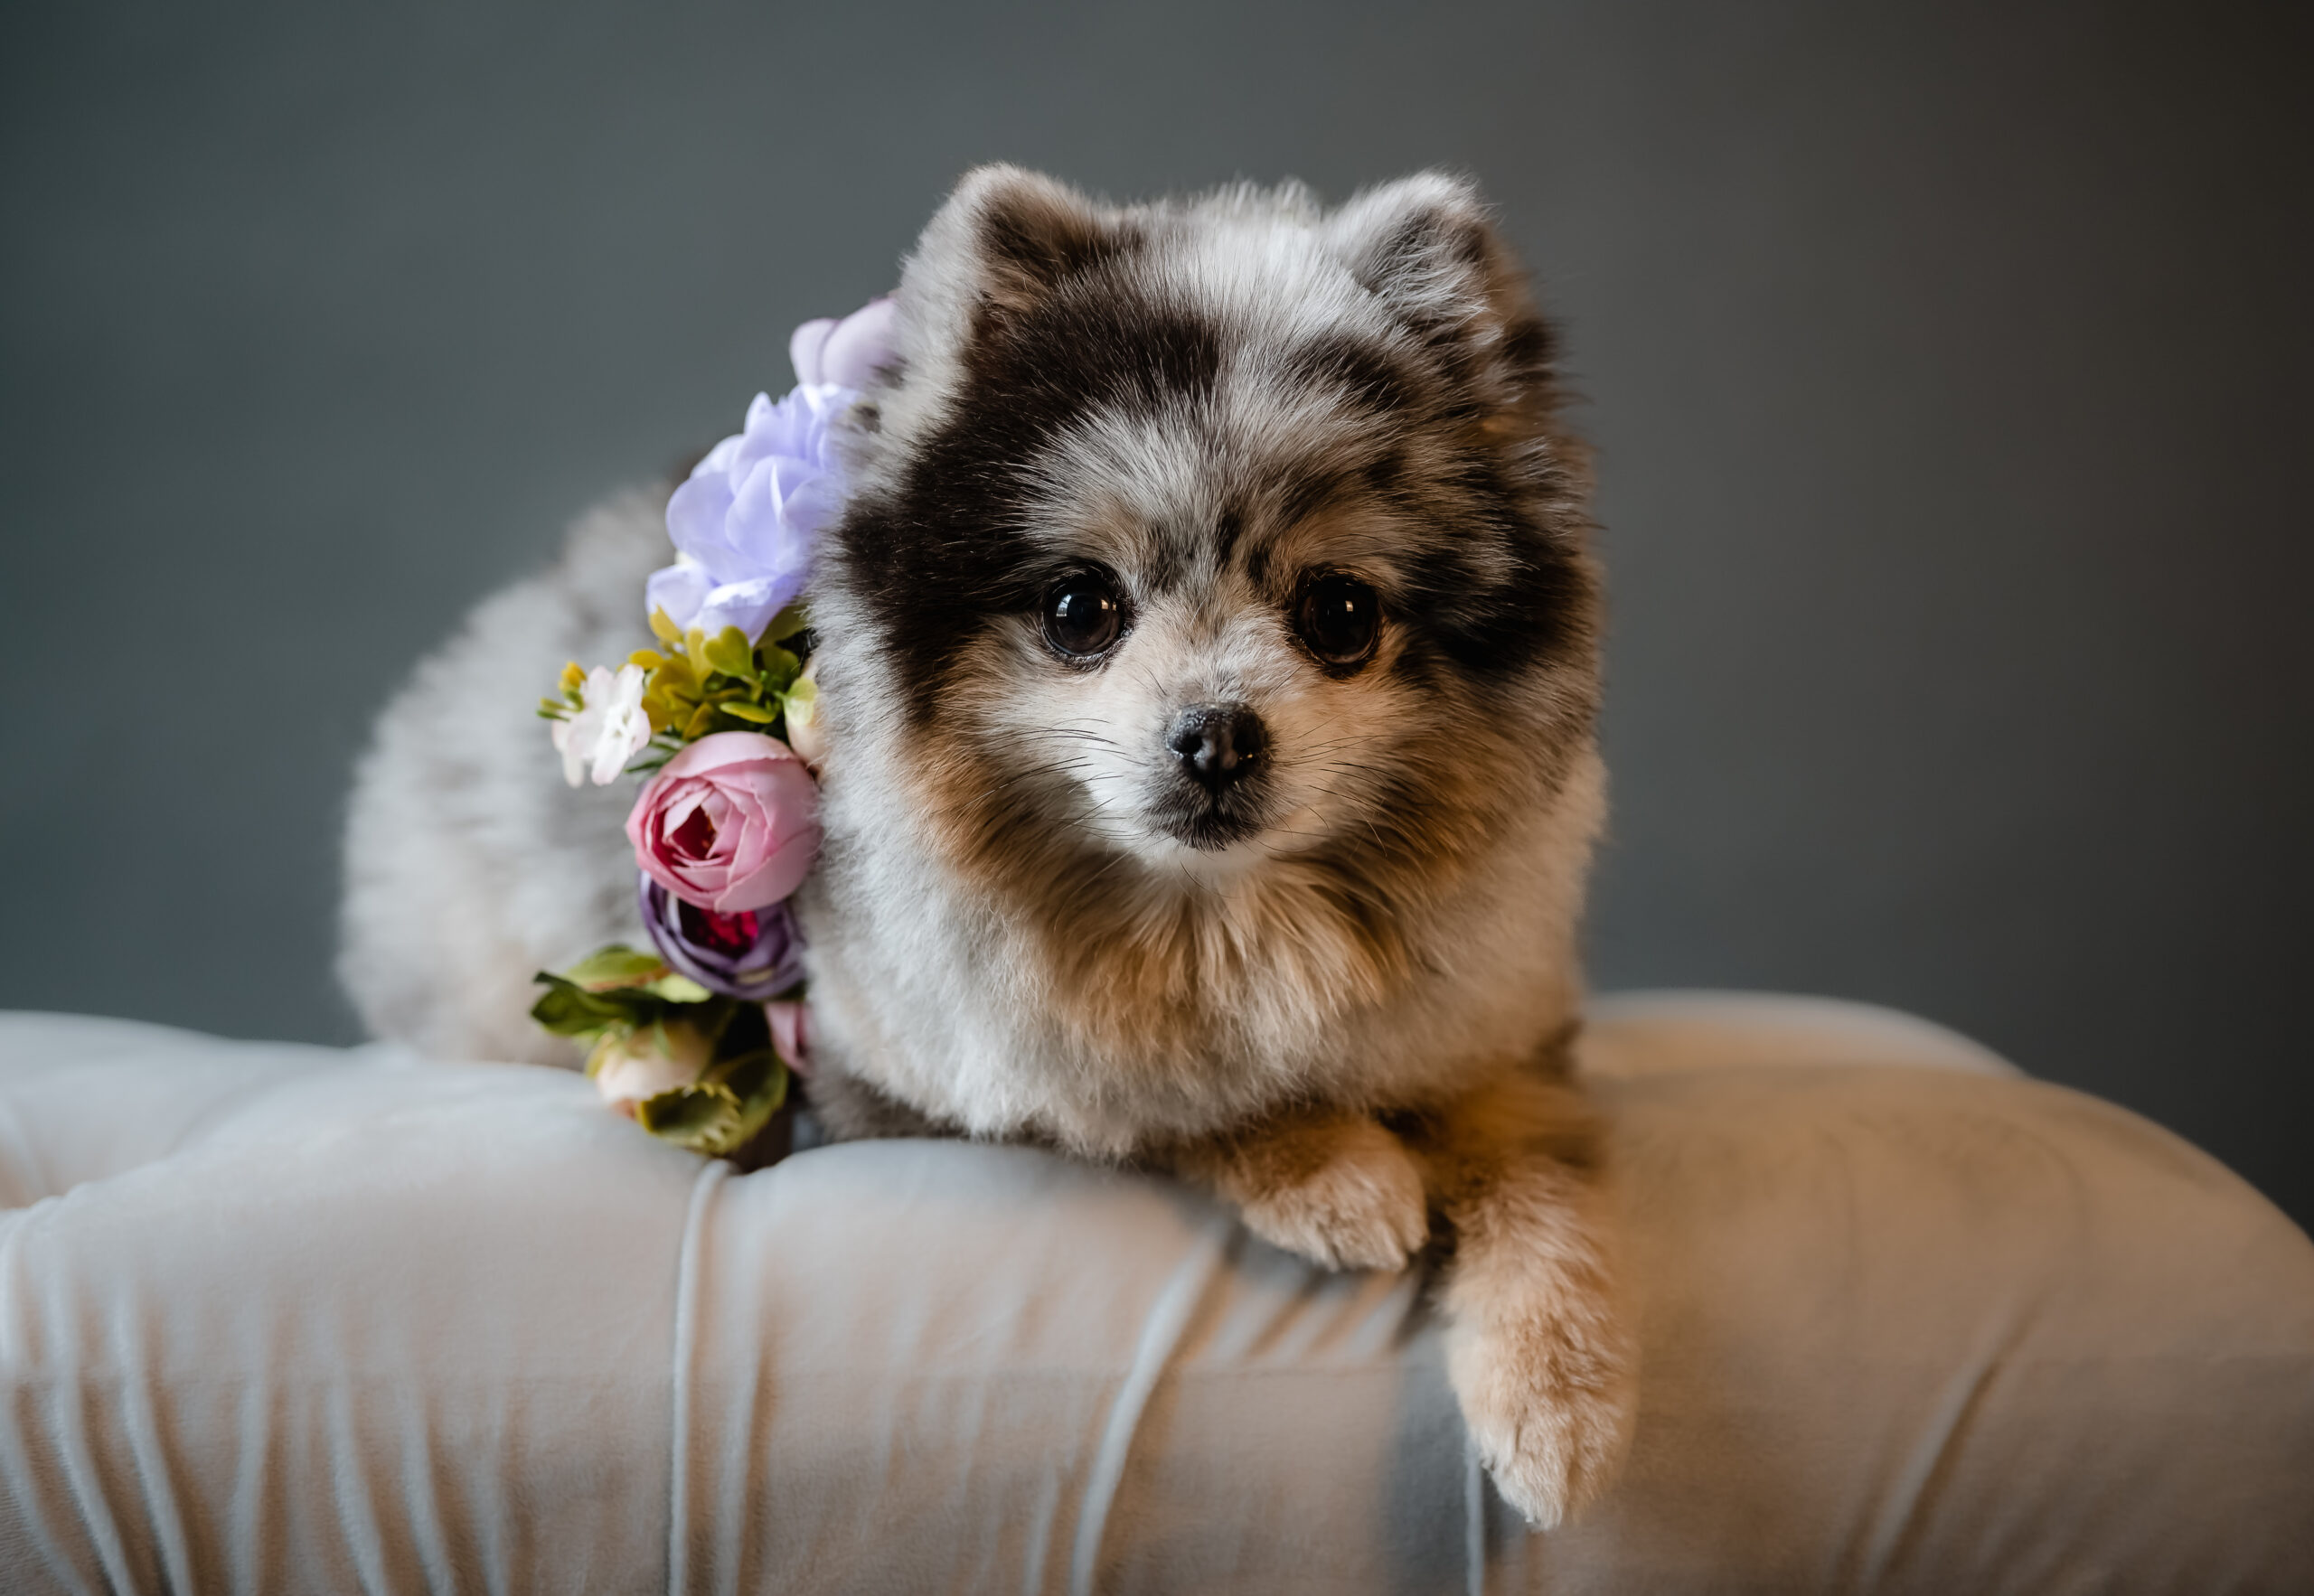 Dog wearing a flower crown